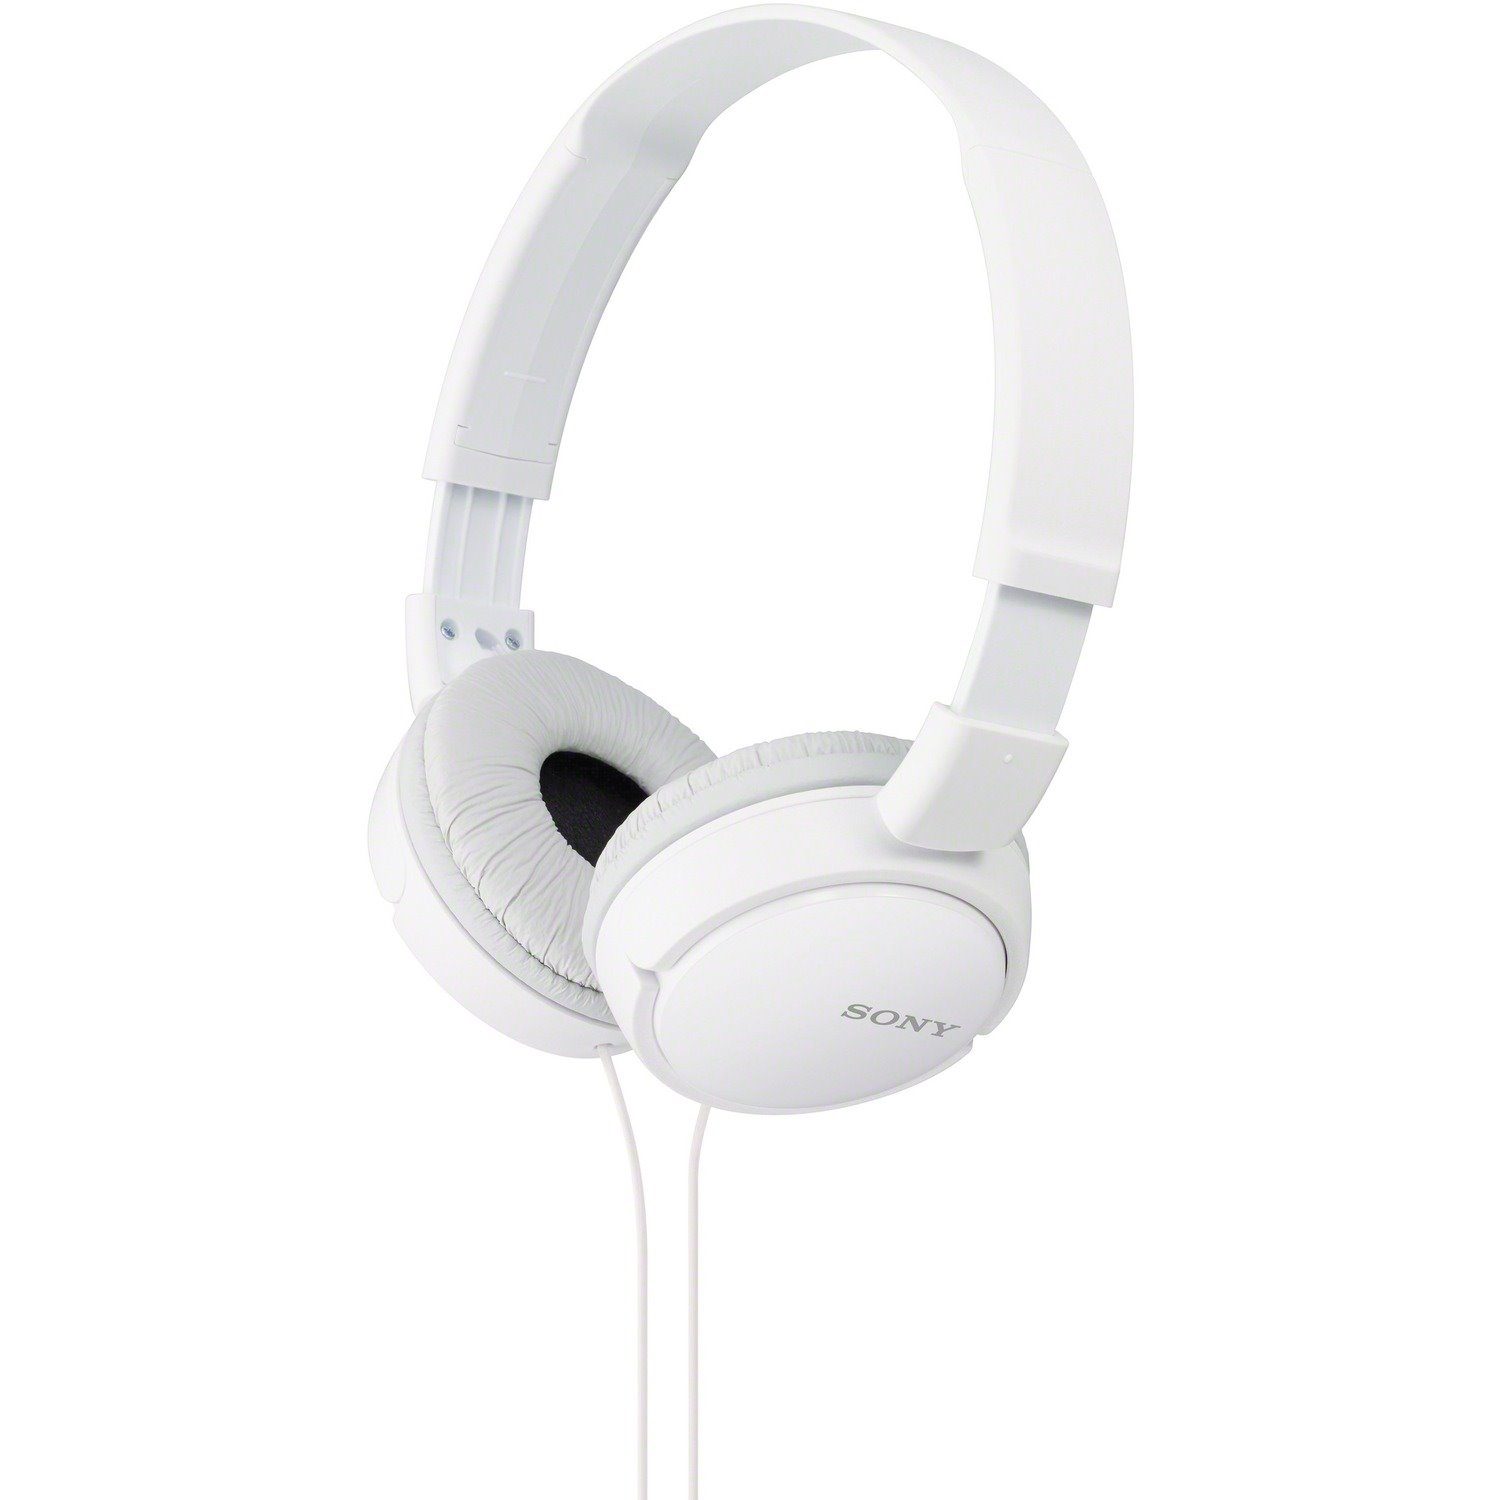 Sony MDR-ZX110/W Wired Over-the-head Binaural Stereo Headphone - White